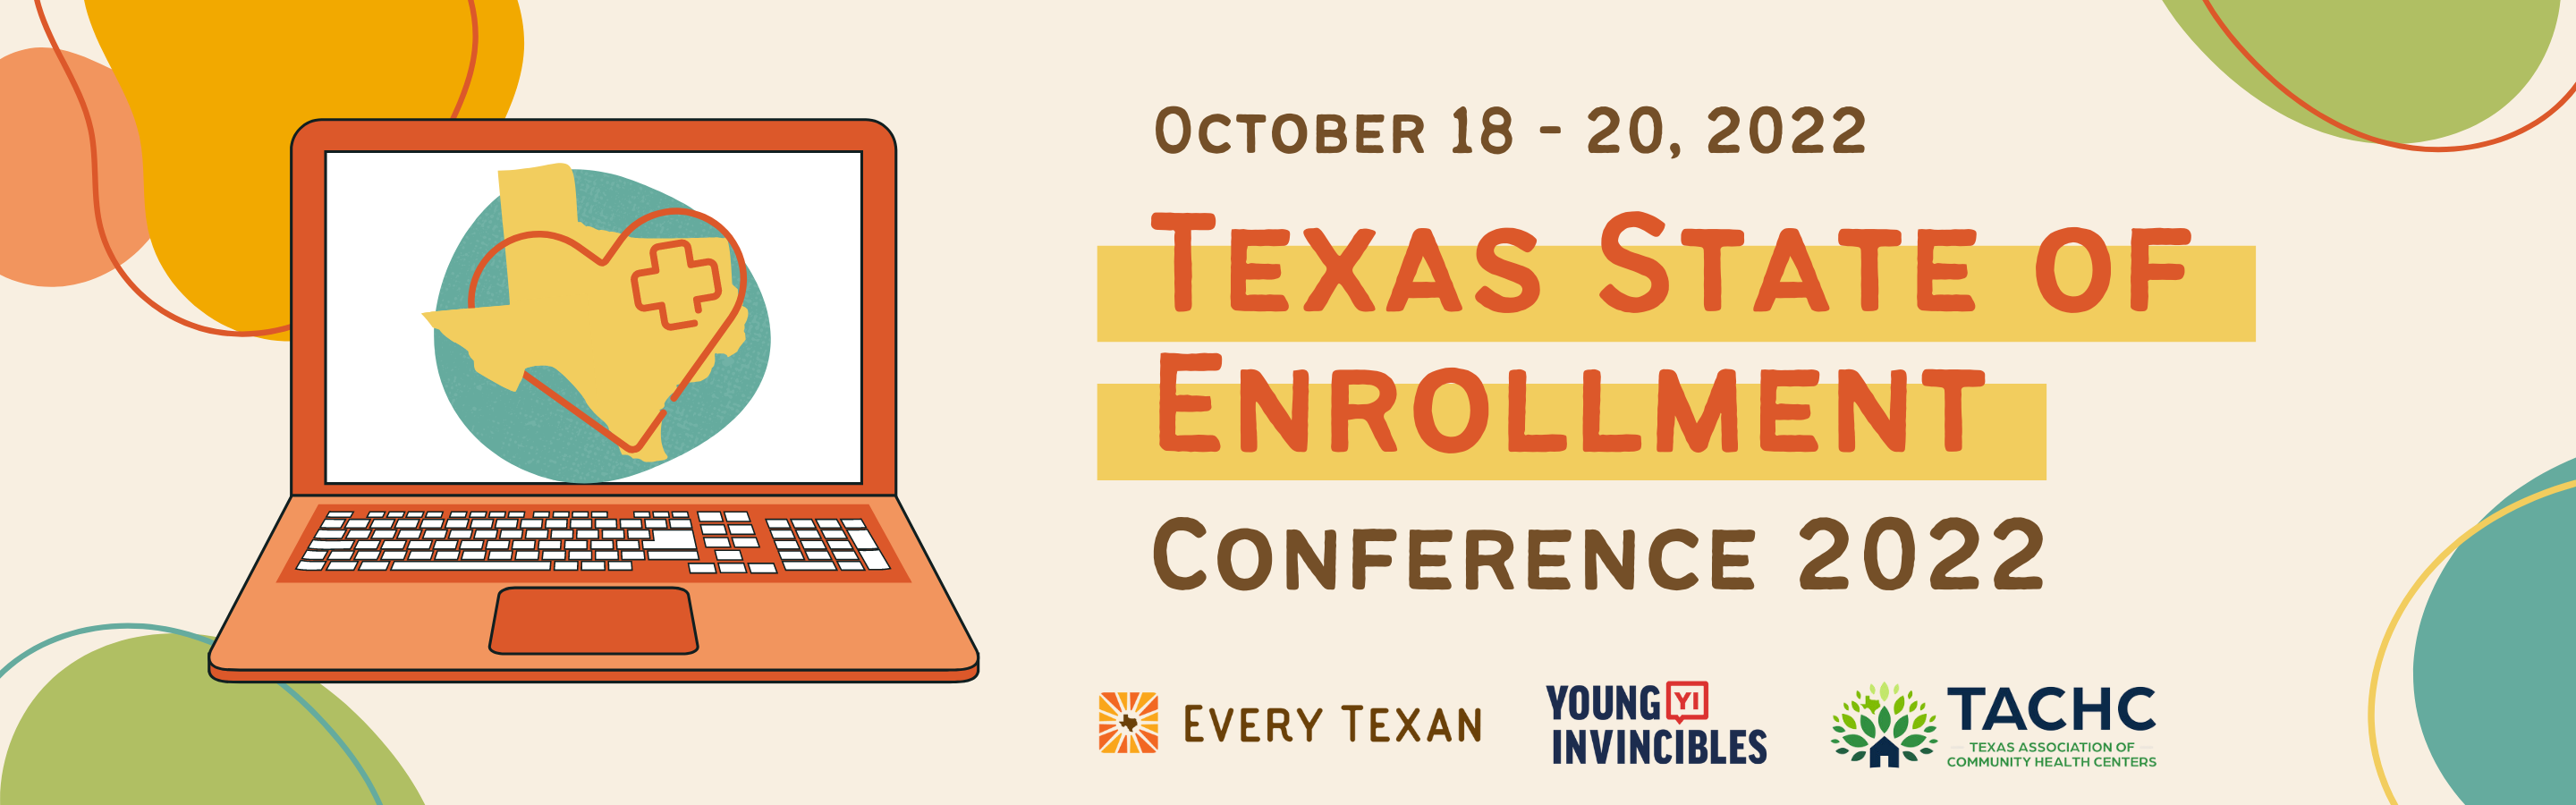 Texas State of Enrollment (TSOE) 2022 Conference